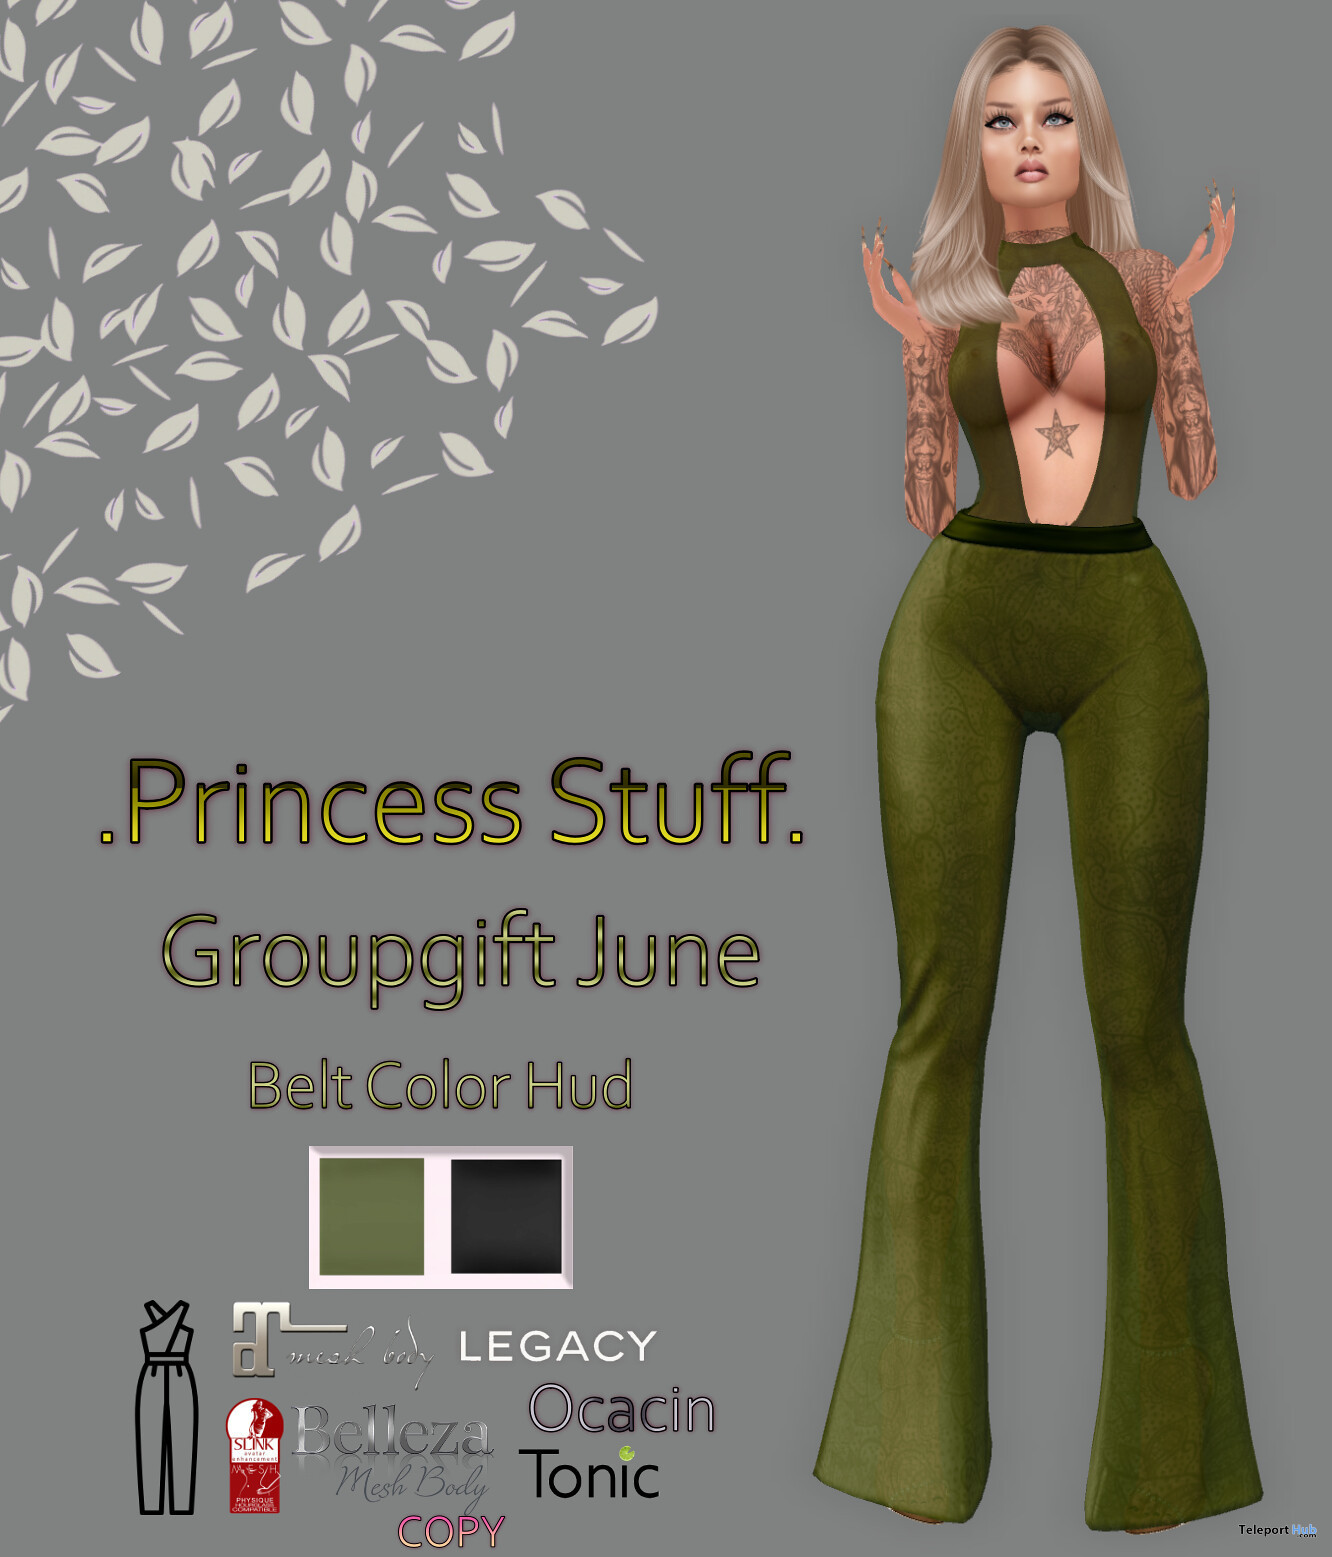 Tonight Suit Green June 2022 Group Gift by Princess Stuff - Teleport Hub - teleporthub.com